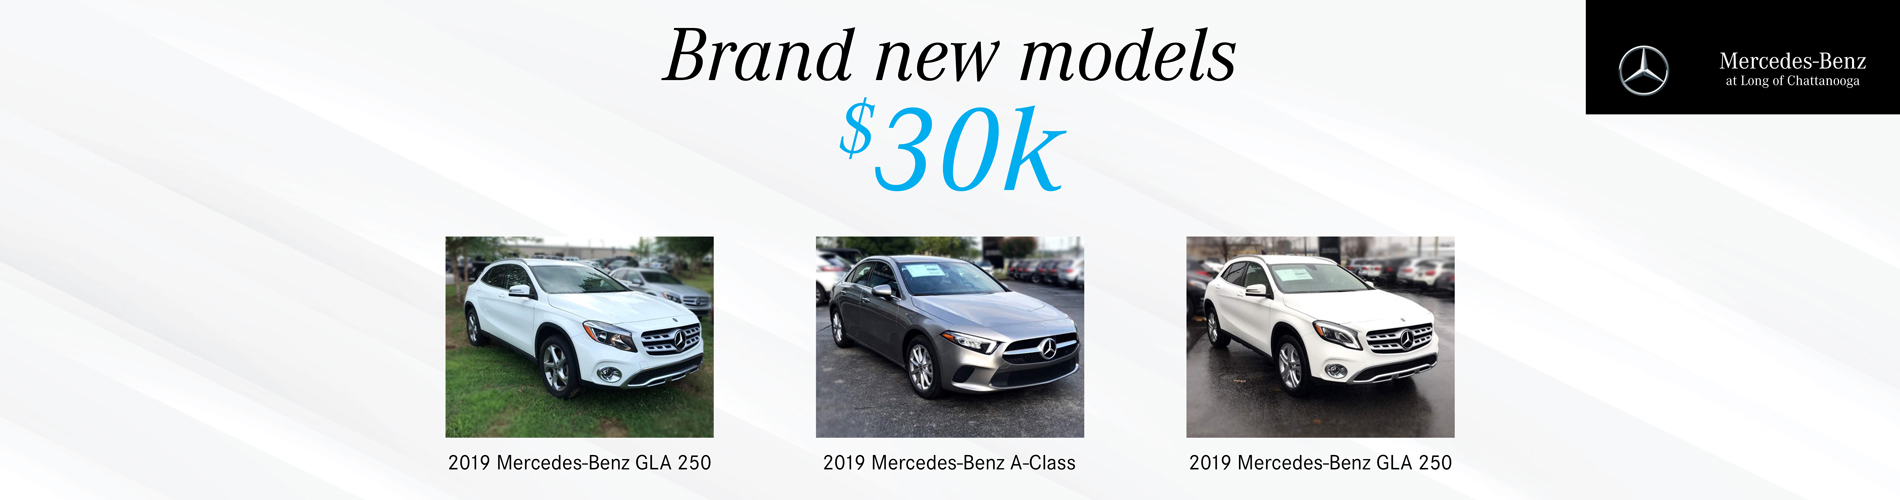 New Models under $30k